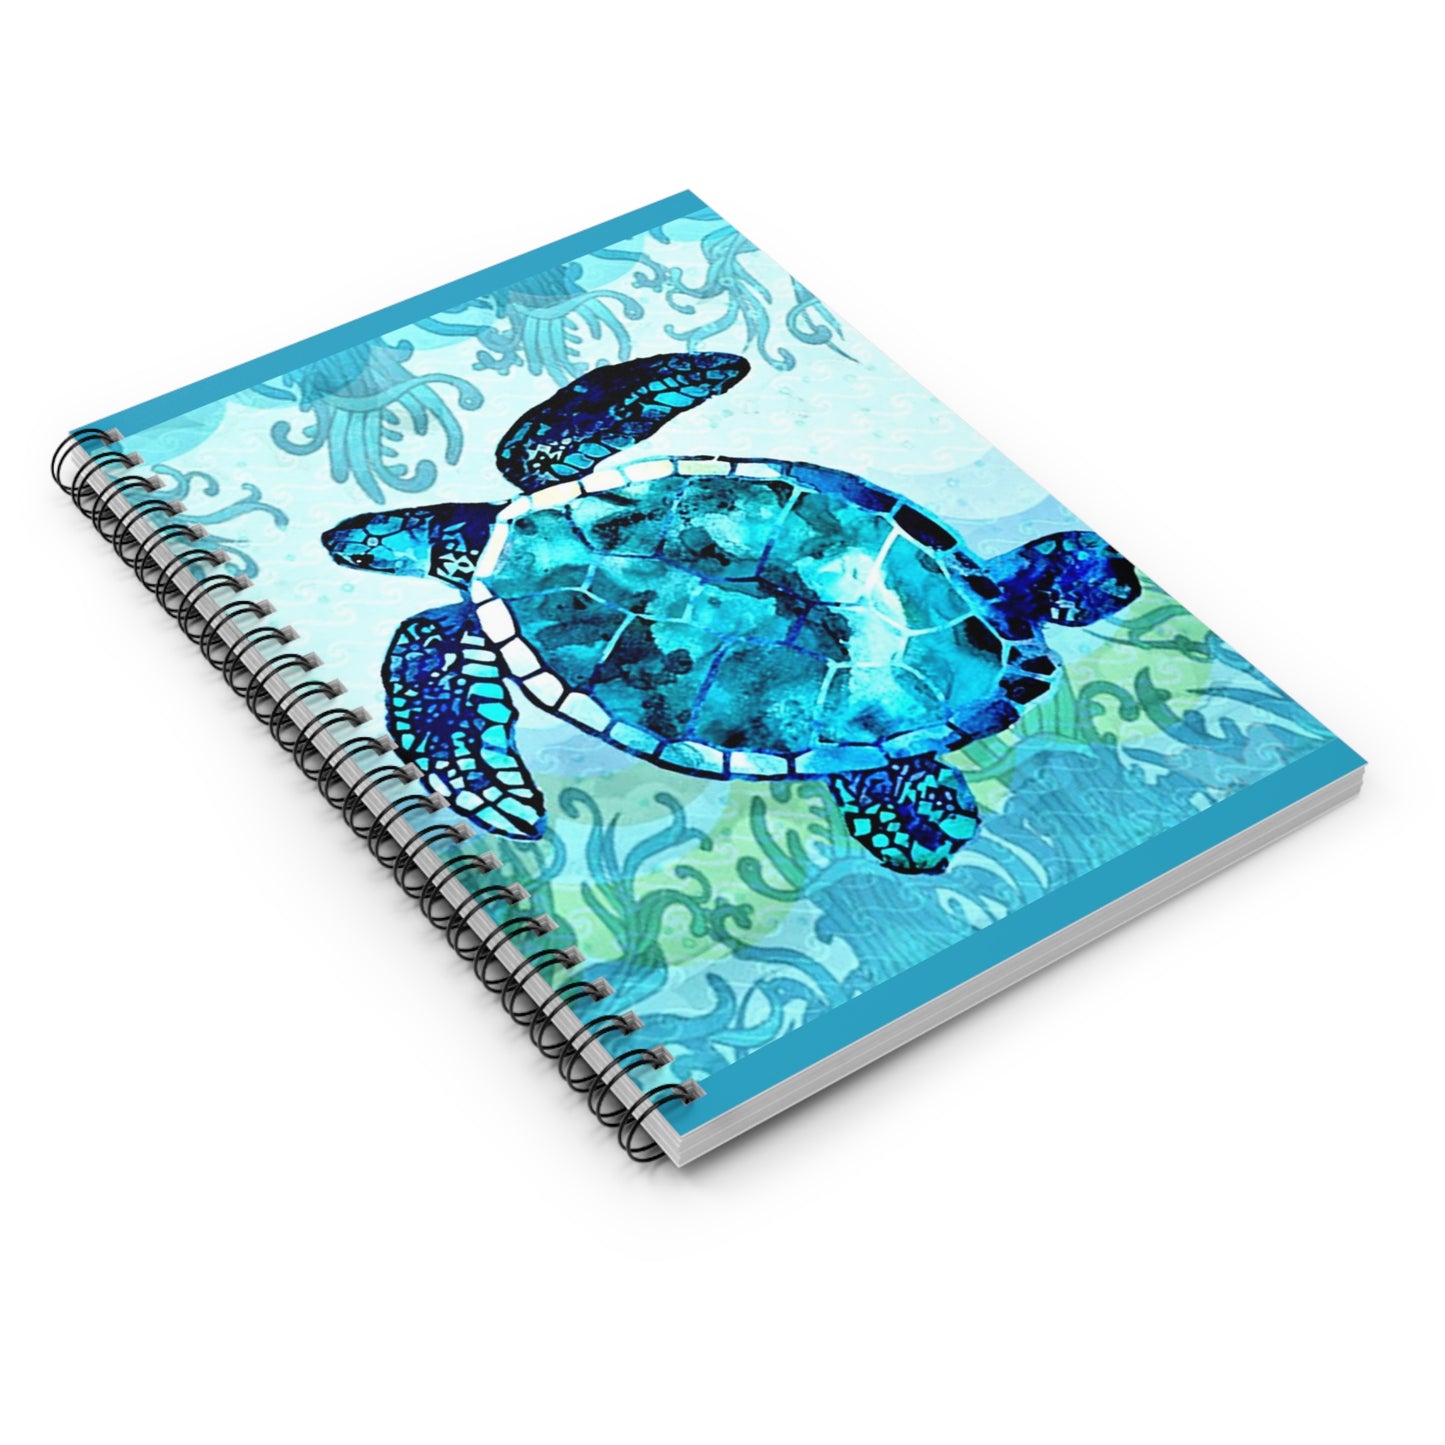 Blue Turtle Journal Spiral Notebook - Ruled Line